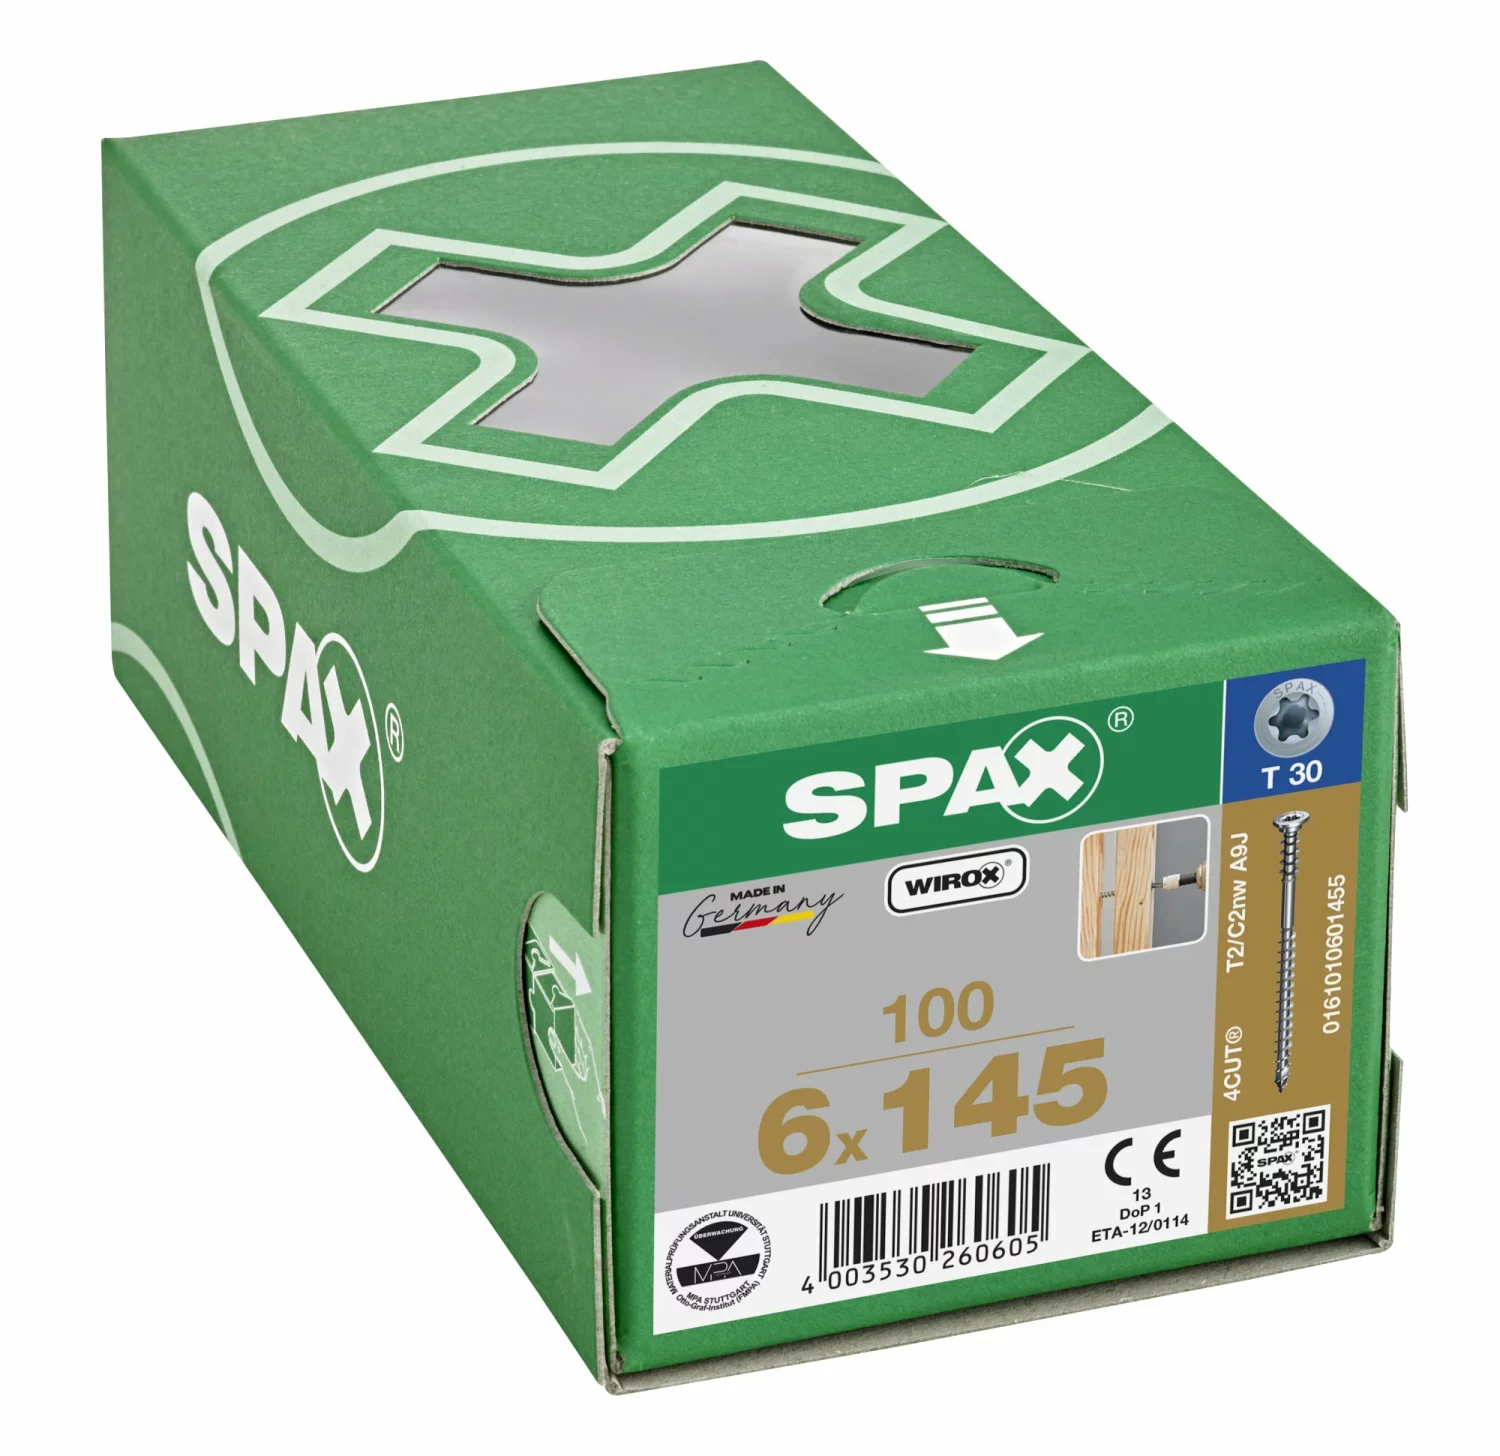 SPAX 161010601455 Stelschroef, Platkop, 6 x 145, Deeldraad, T-STAR plus TX30 - WIROX - 100 stuks-image